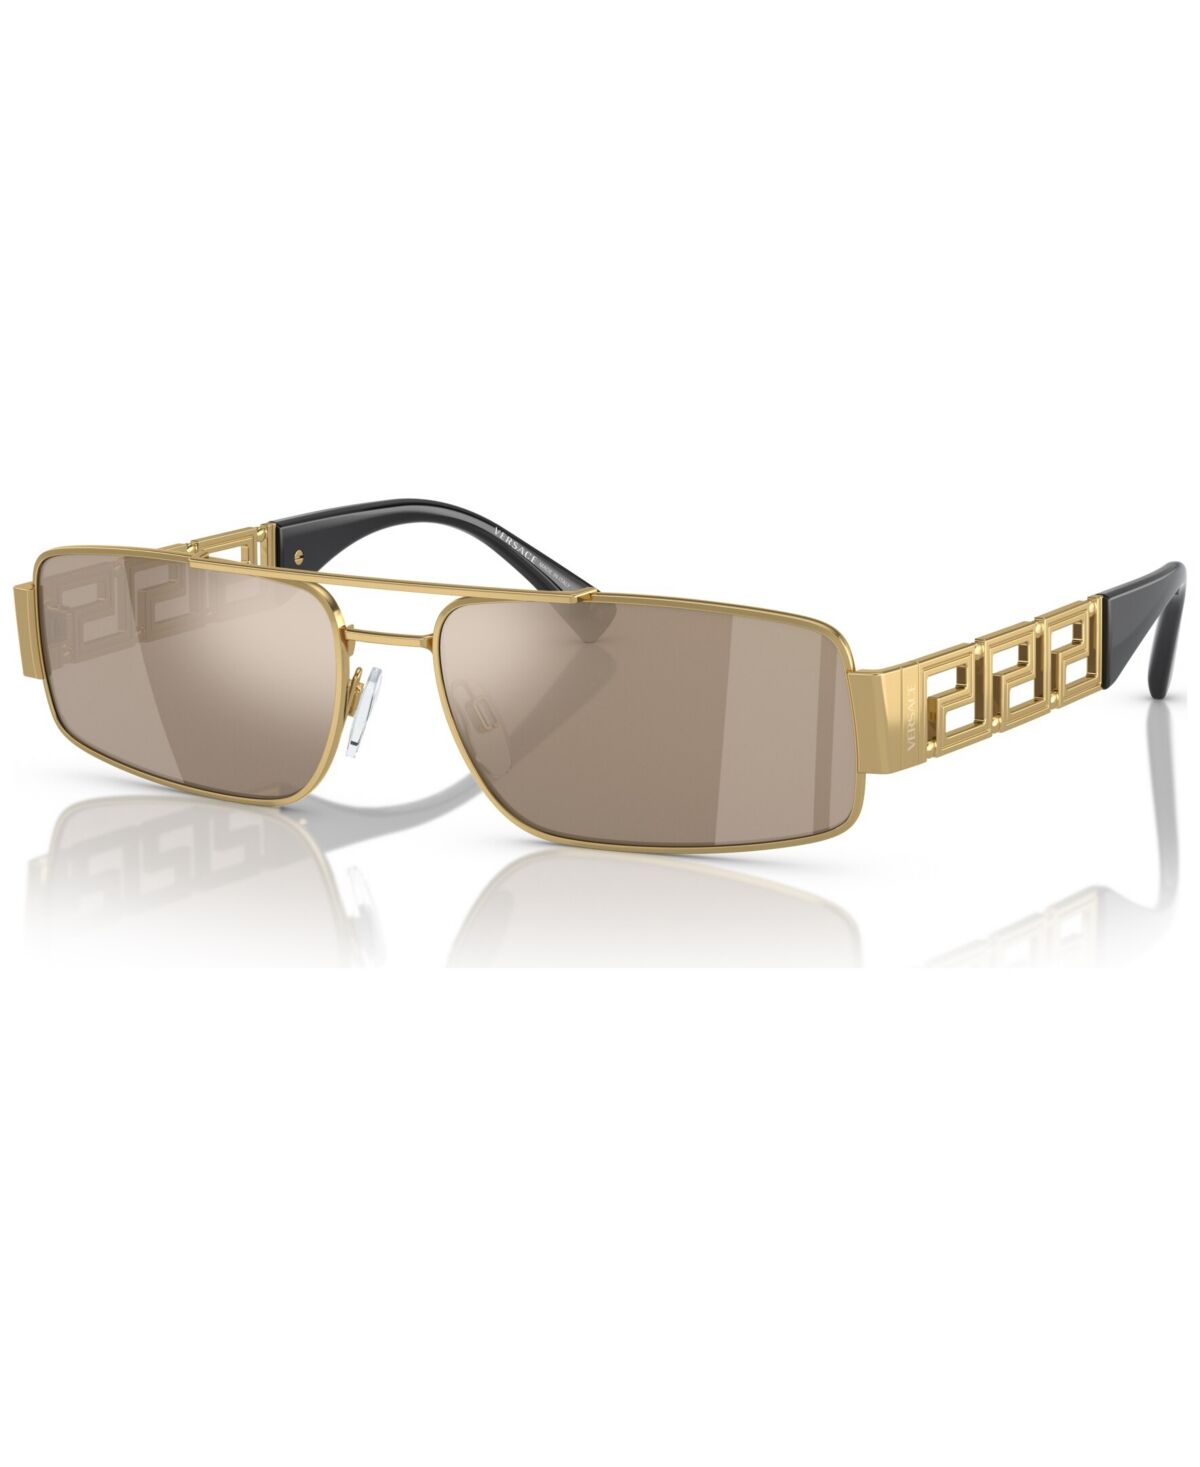 Versace Men's Sunglasses, VE2257 - Light Brown/Gold Mirror